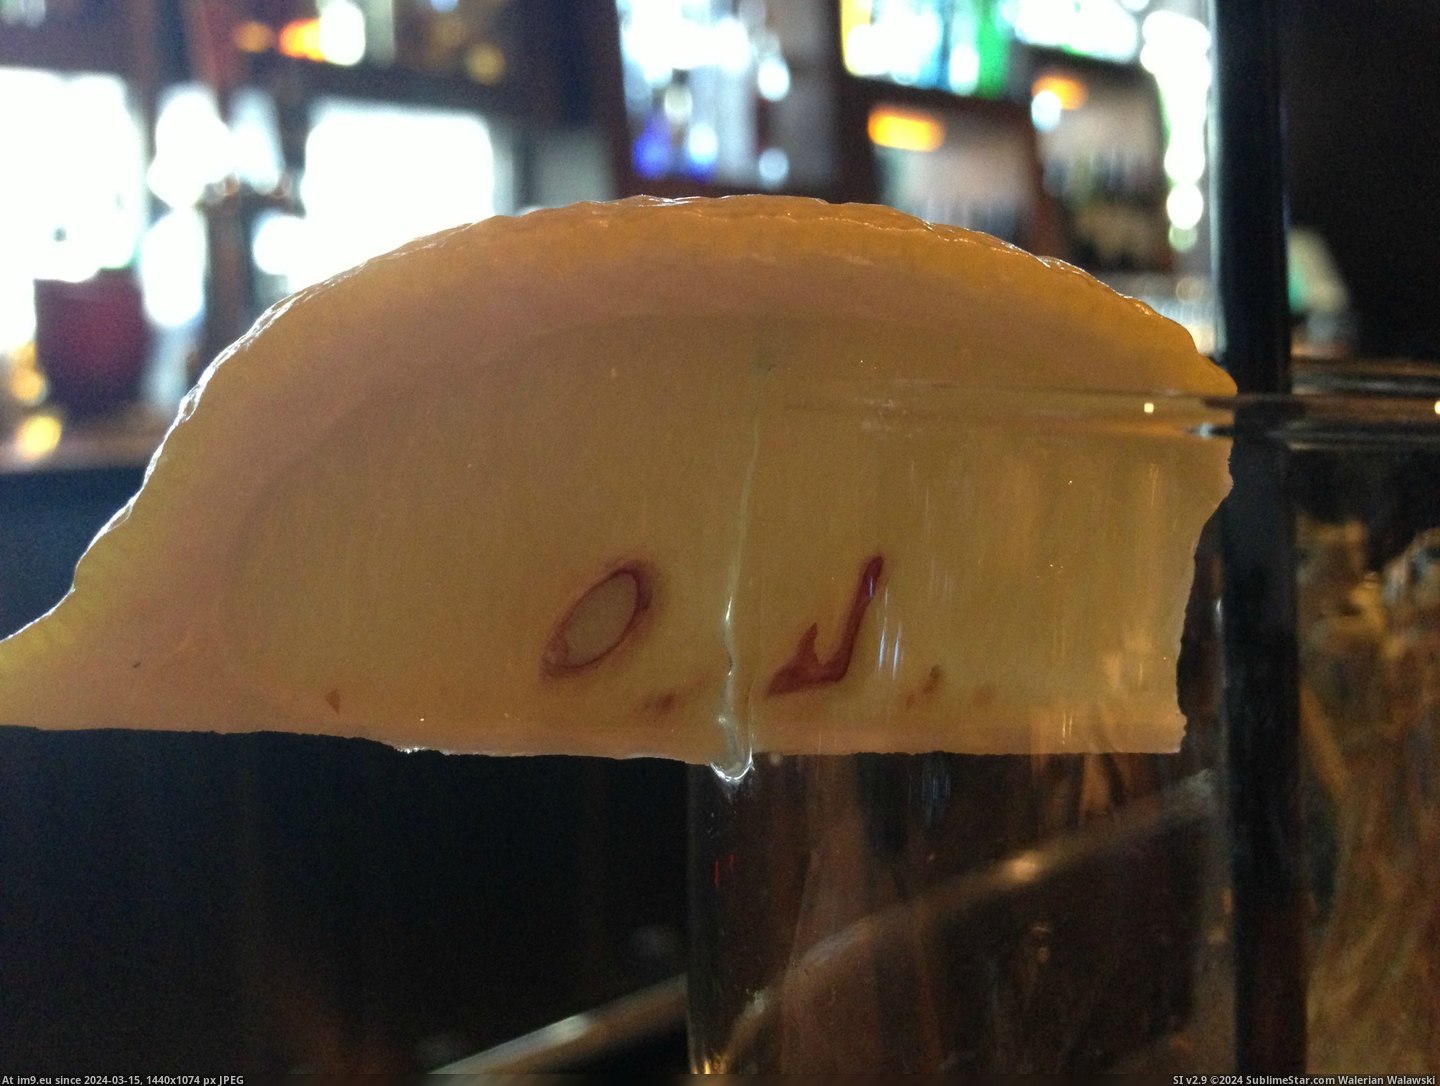 #Lemon #Spelled #Slice #Seeds [Mildlyinteresting] The seeds in this lemon slice spelled Pic. (Obraz z album My r/MILDLYINTERESTING favs))